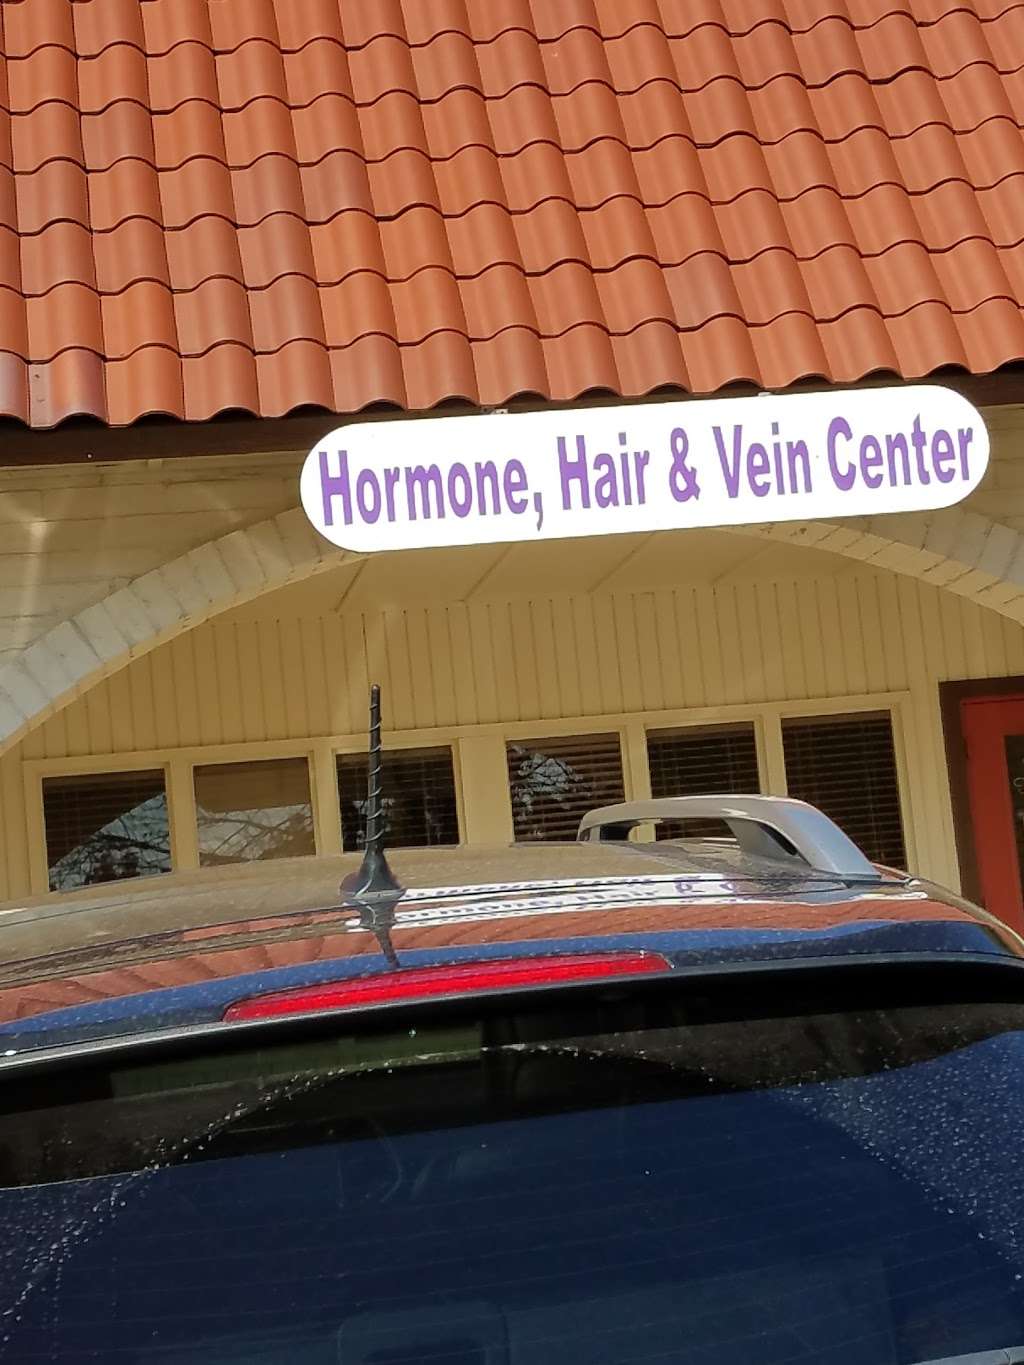 Hormone Hair & Vein Center: Richardson Marilyn R MD | 12616 W 62nd Terrace #112, Shawnee, KS 66216 | Phone: (913) 631-0277